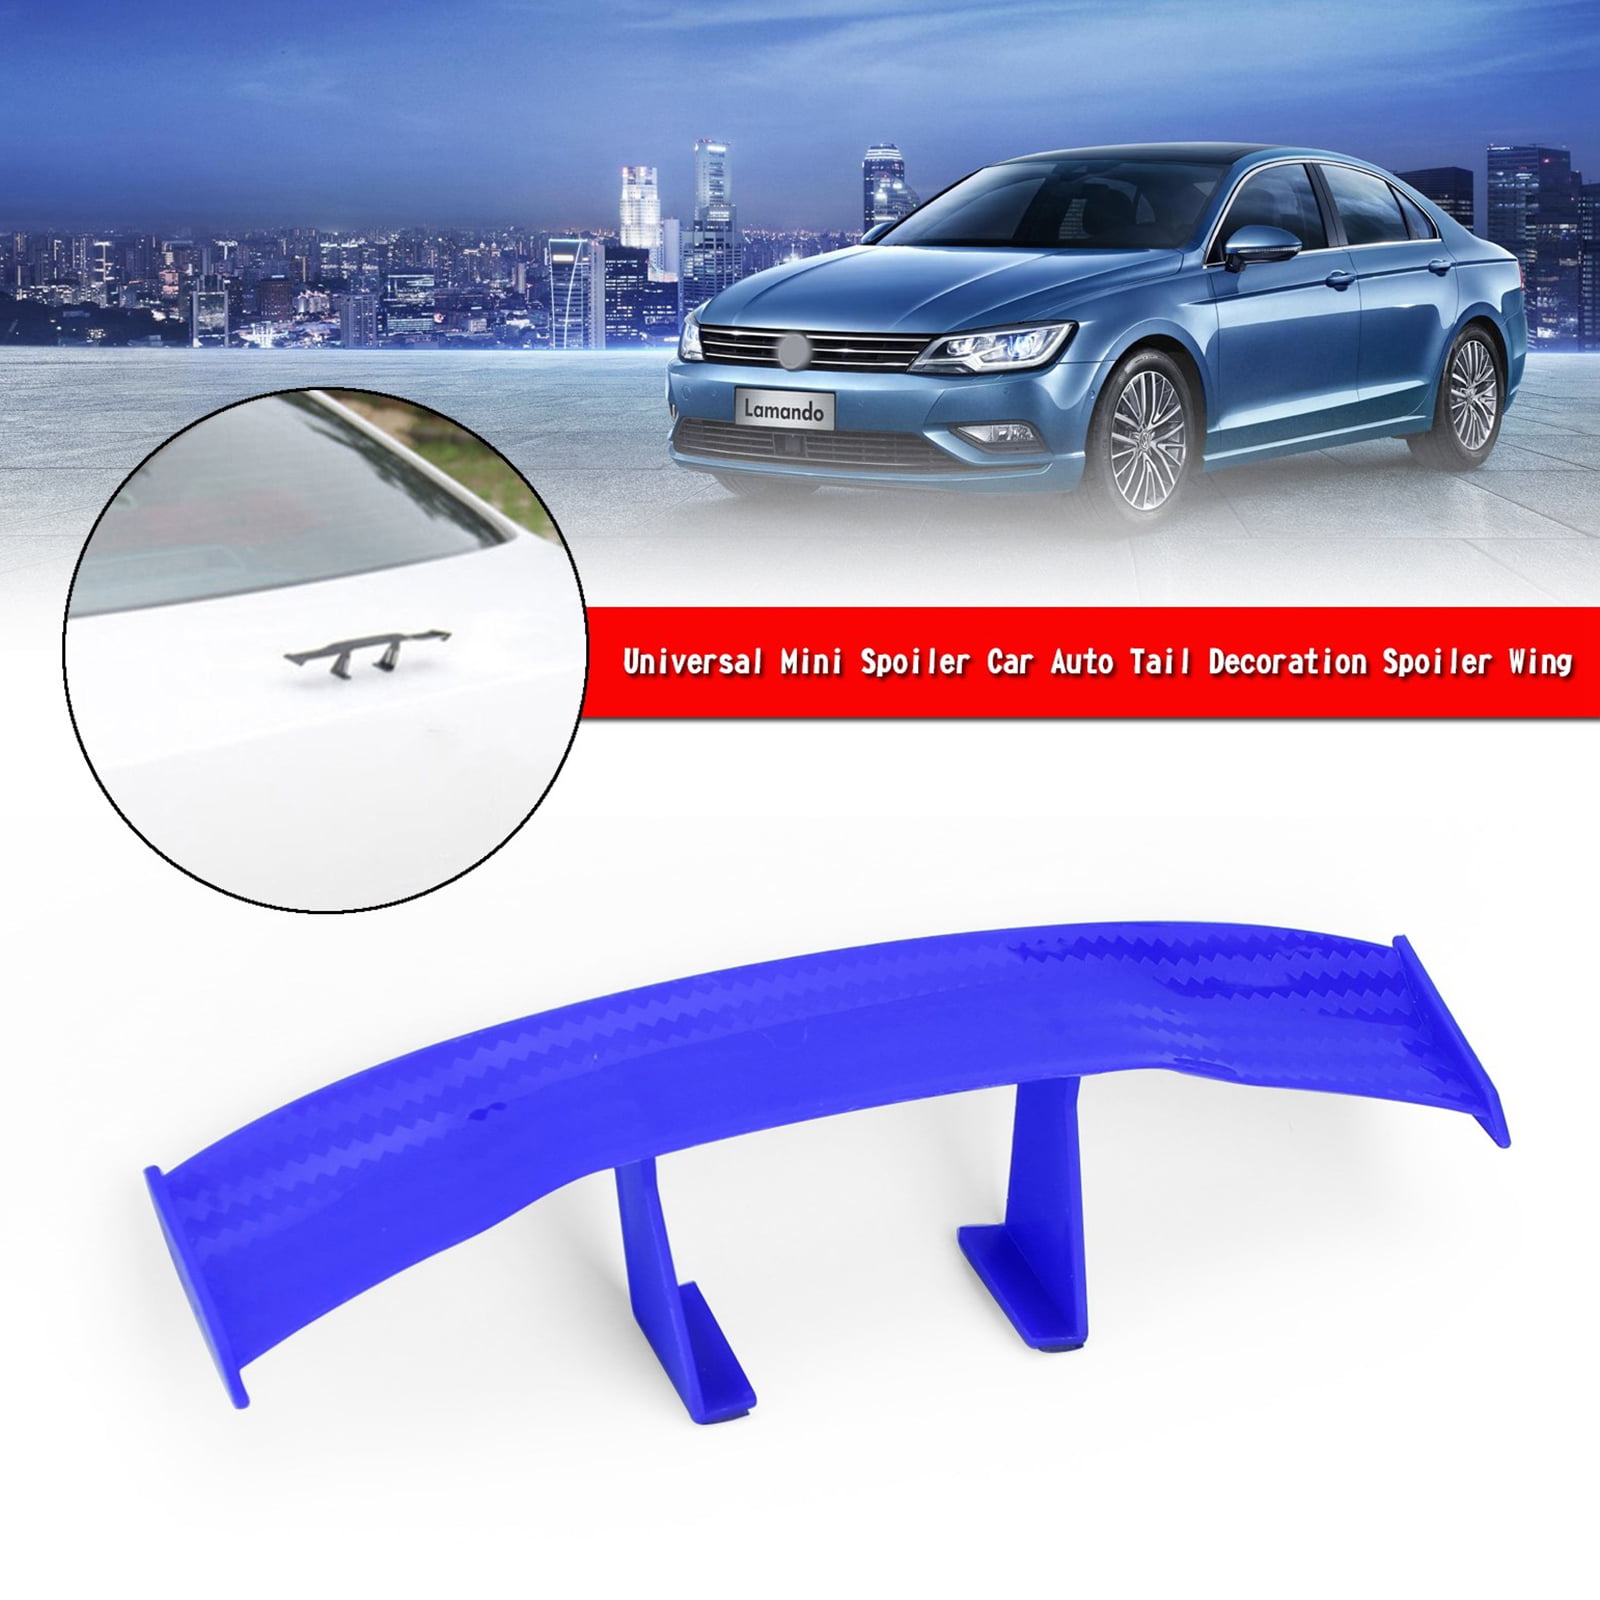 Buy 1Pc Universal Mini Spoiler Auto Car Tail Decoration Spoiler